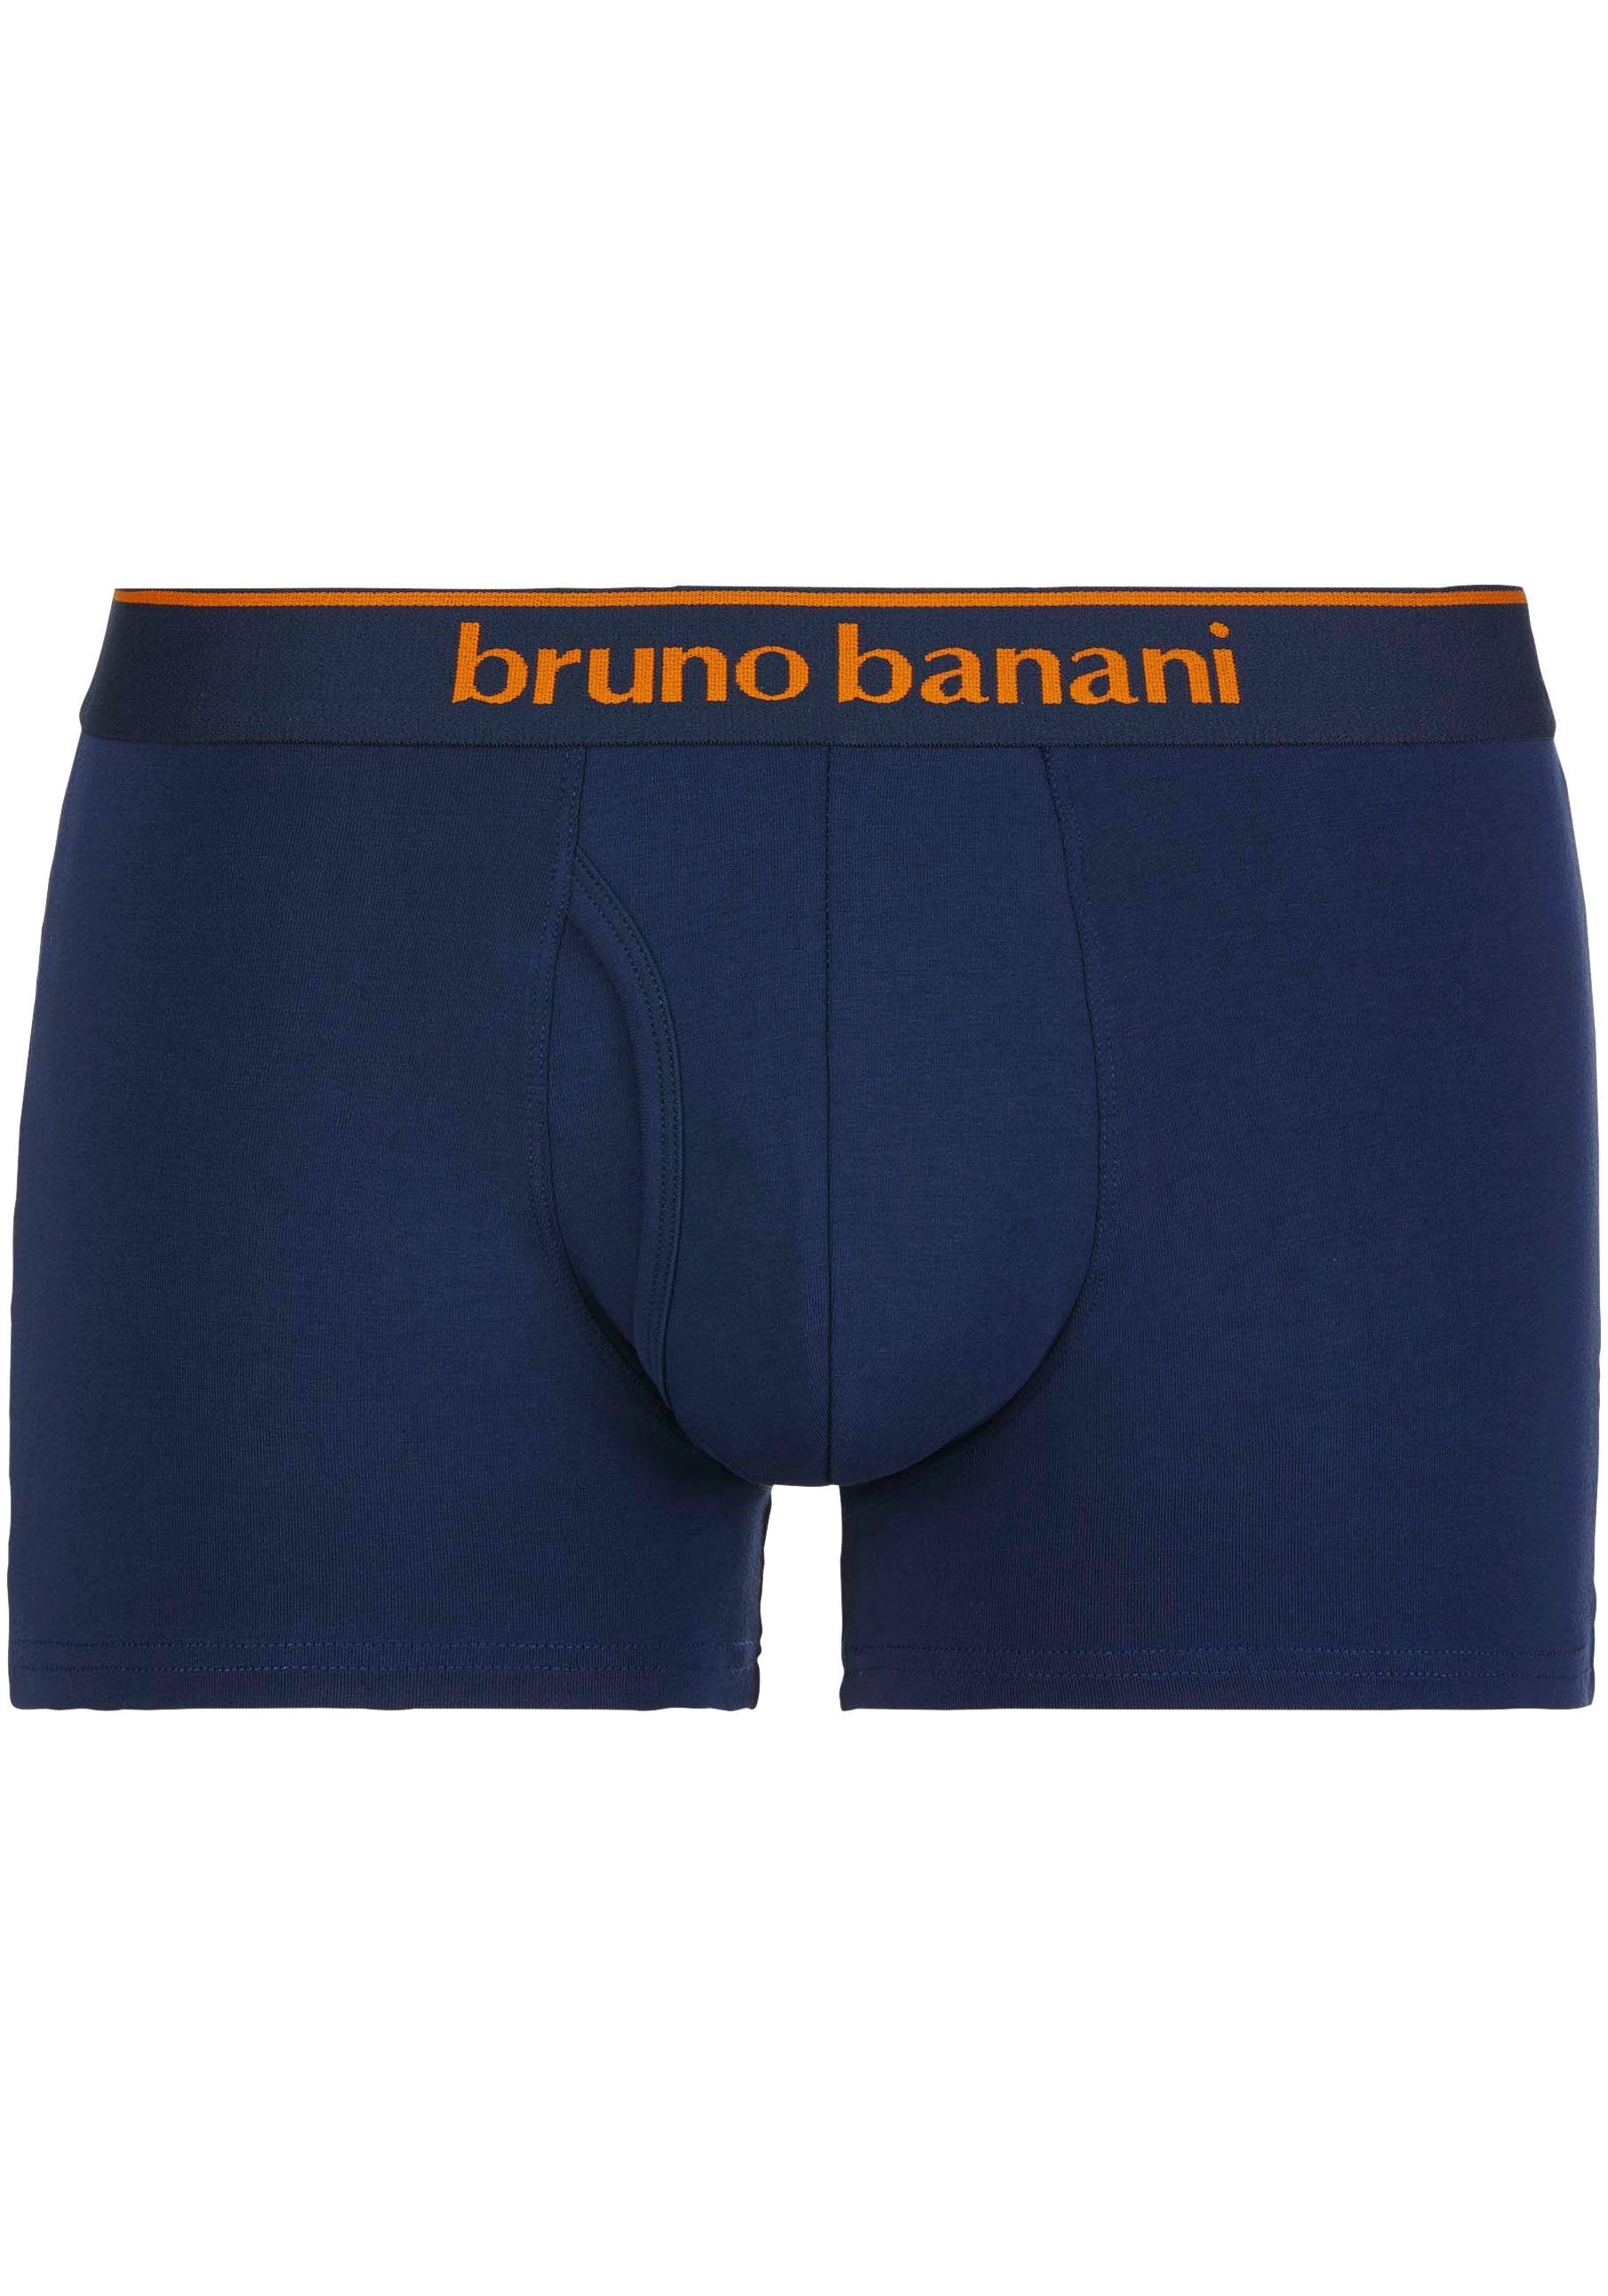 Bruno Banani Details Access Quick Short (Packung, 2Pack blau-schwarz Boxershorts Kontrastfarbene 2-St)